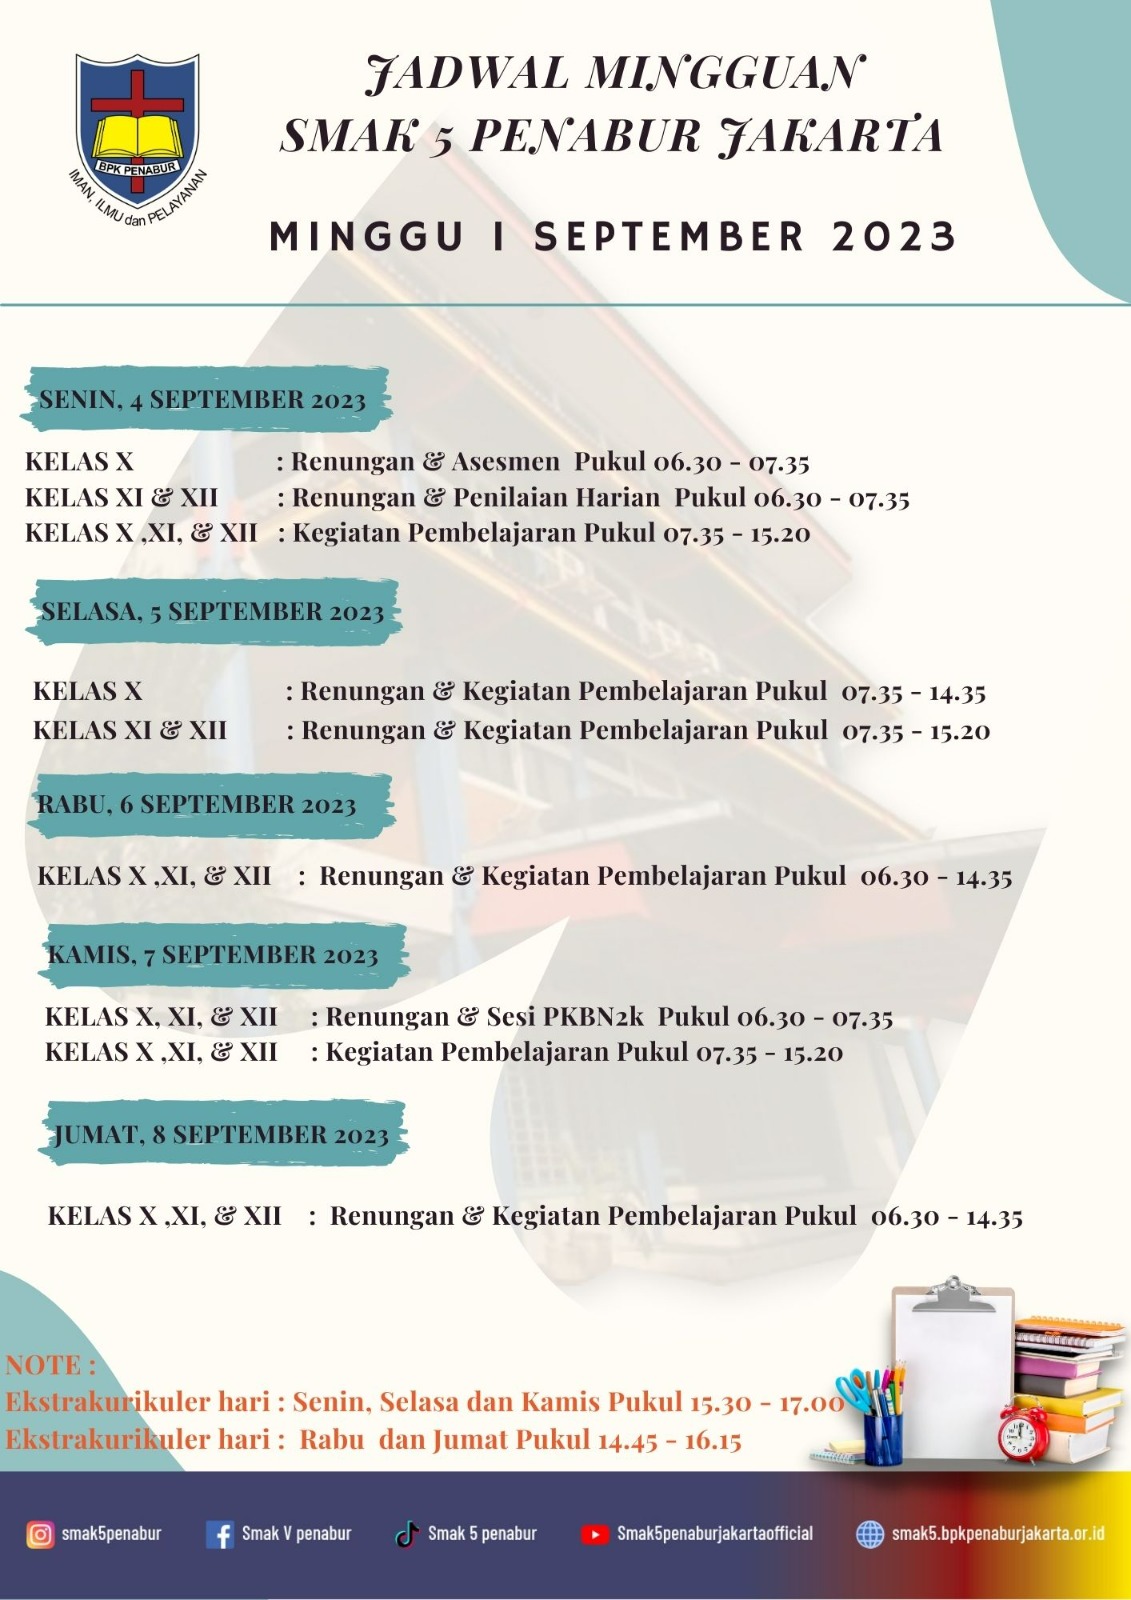 Jadwal Minggu I September 2023 SMAK 5 PENABUR Jakarta